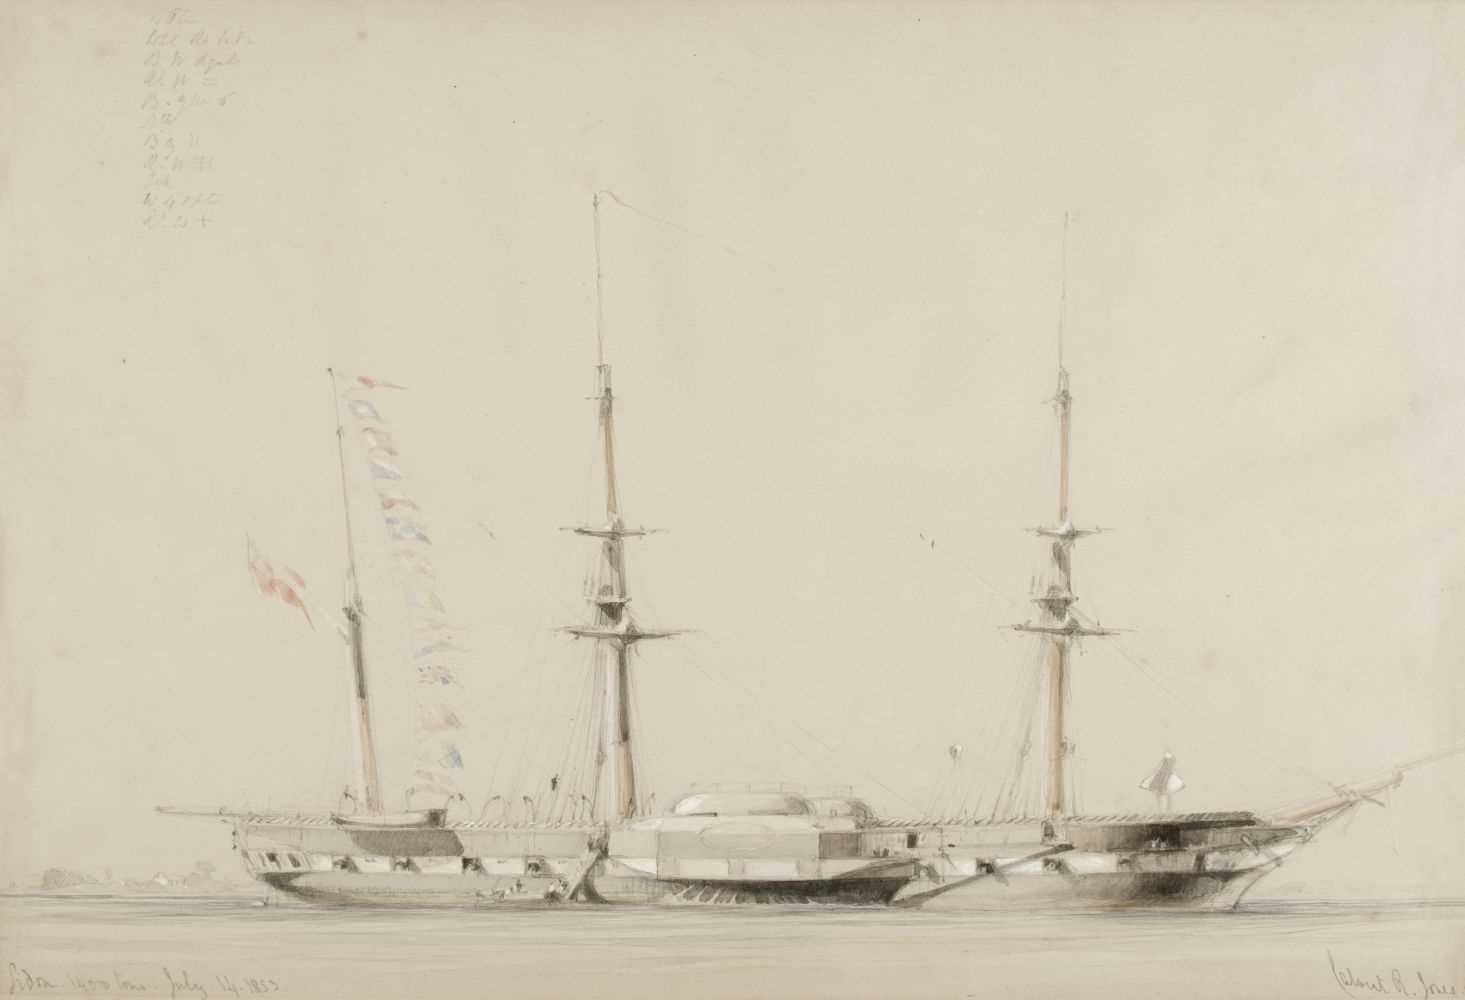 Lot 374 - Jones (Calvert R., 1804-1877). Sidon 1400 tons, July 14 1853